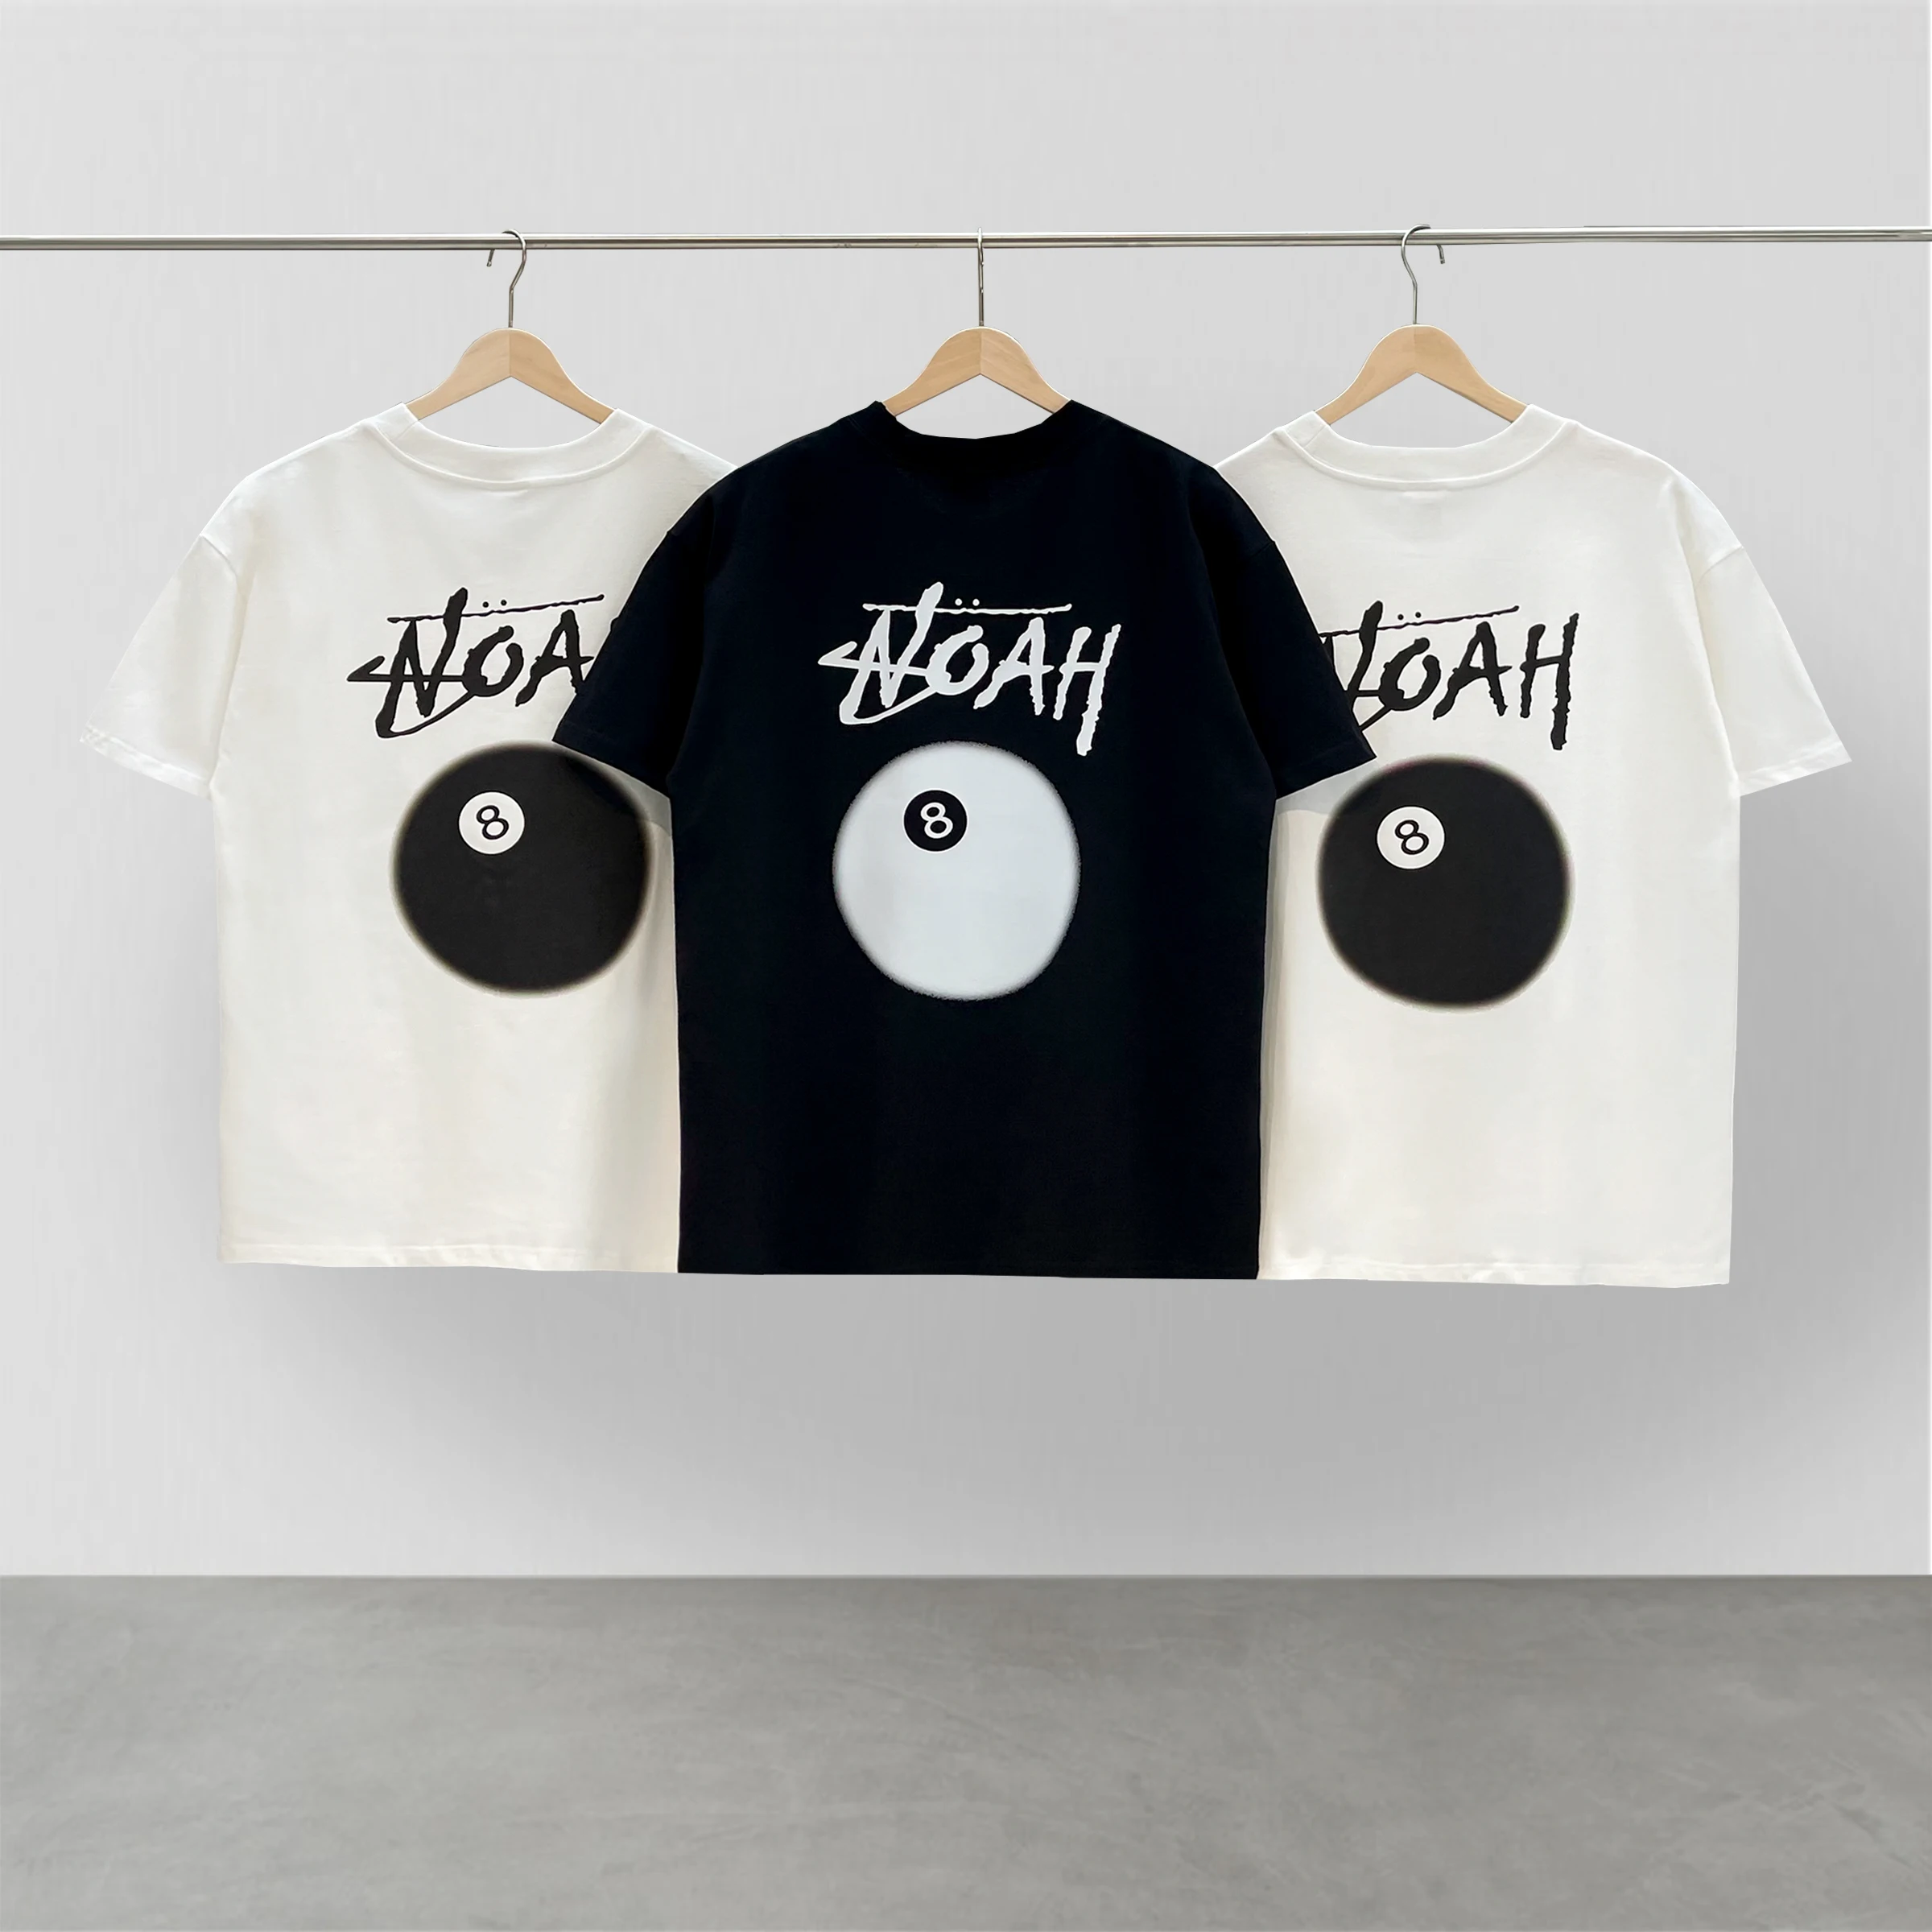 

NOAH ALEX New Fashion Street Brand Summer Unisex T-shirt Black 8 Print Large Logo Oversize Cotton Tee Hip Hop Loose Short Sleeve